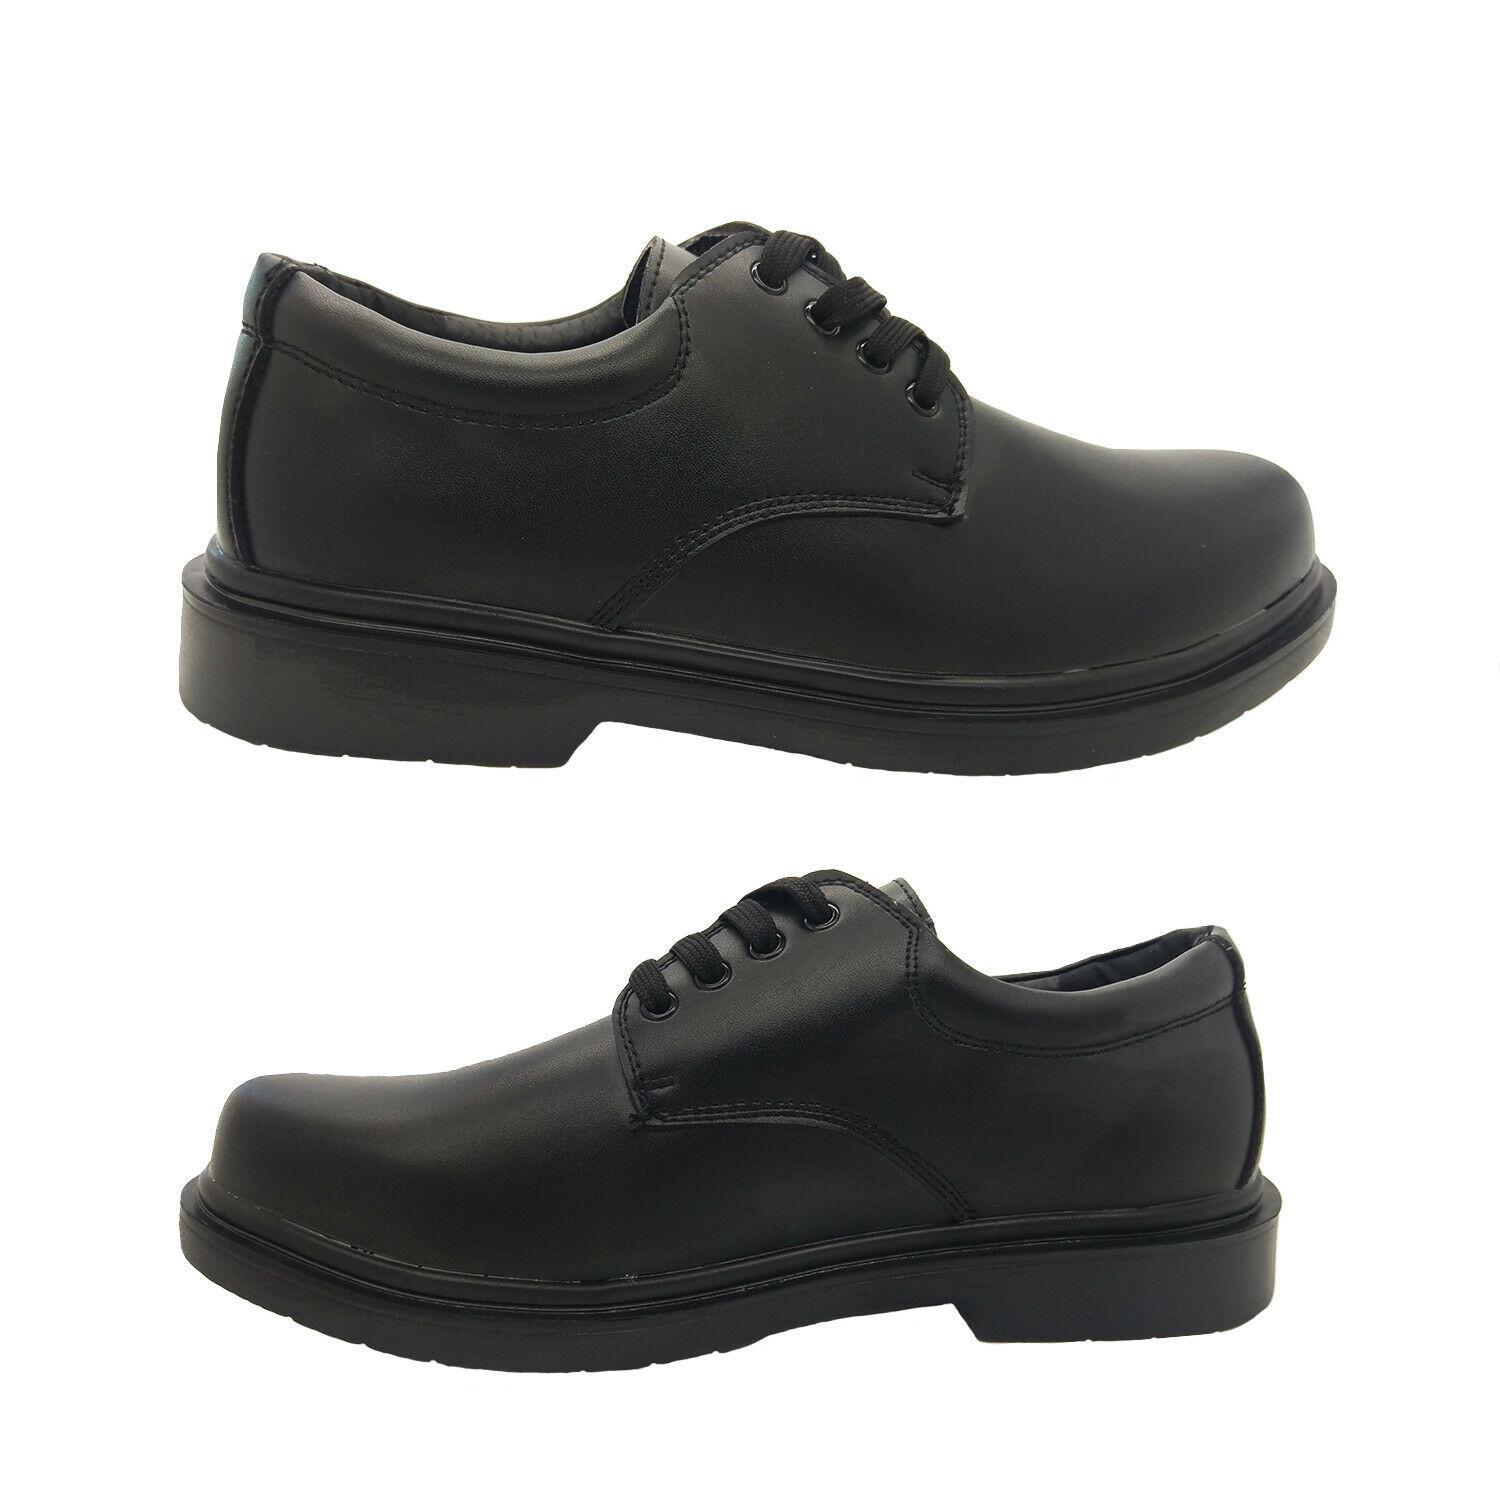 Boys Shoes Grosby Hamburg Jnr Black Boys/Youth Leather School Shoe Size 13-5 NEW Black 2